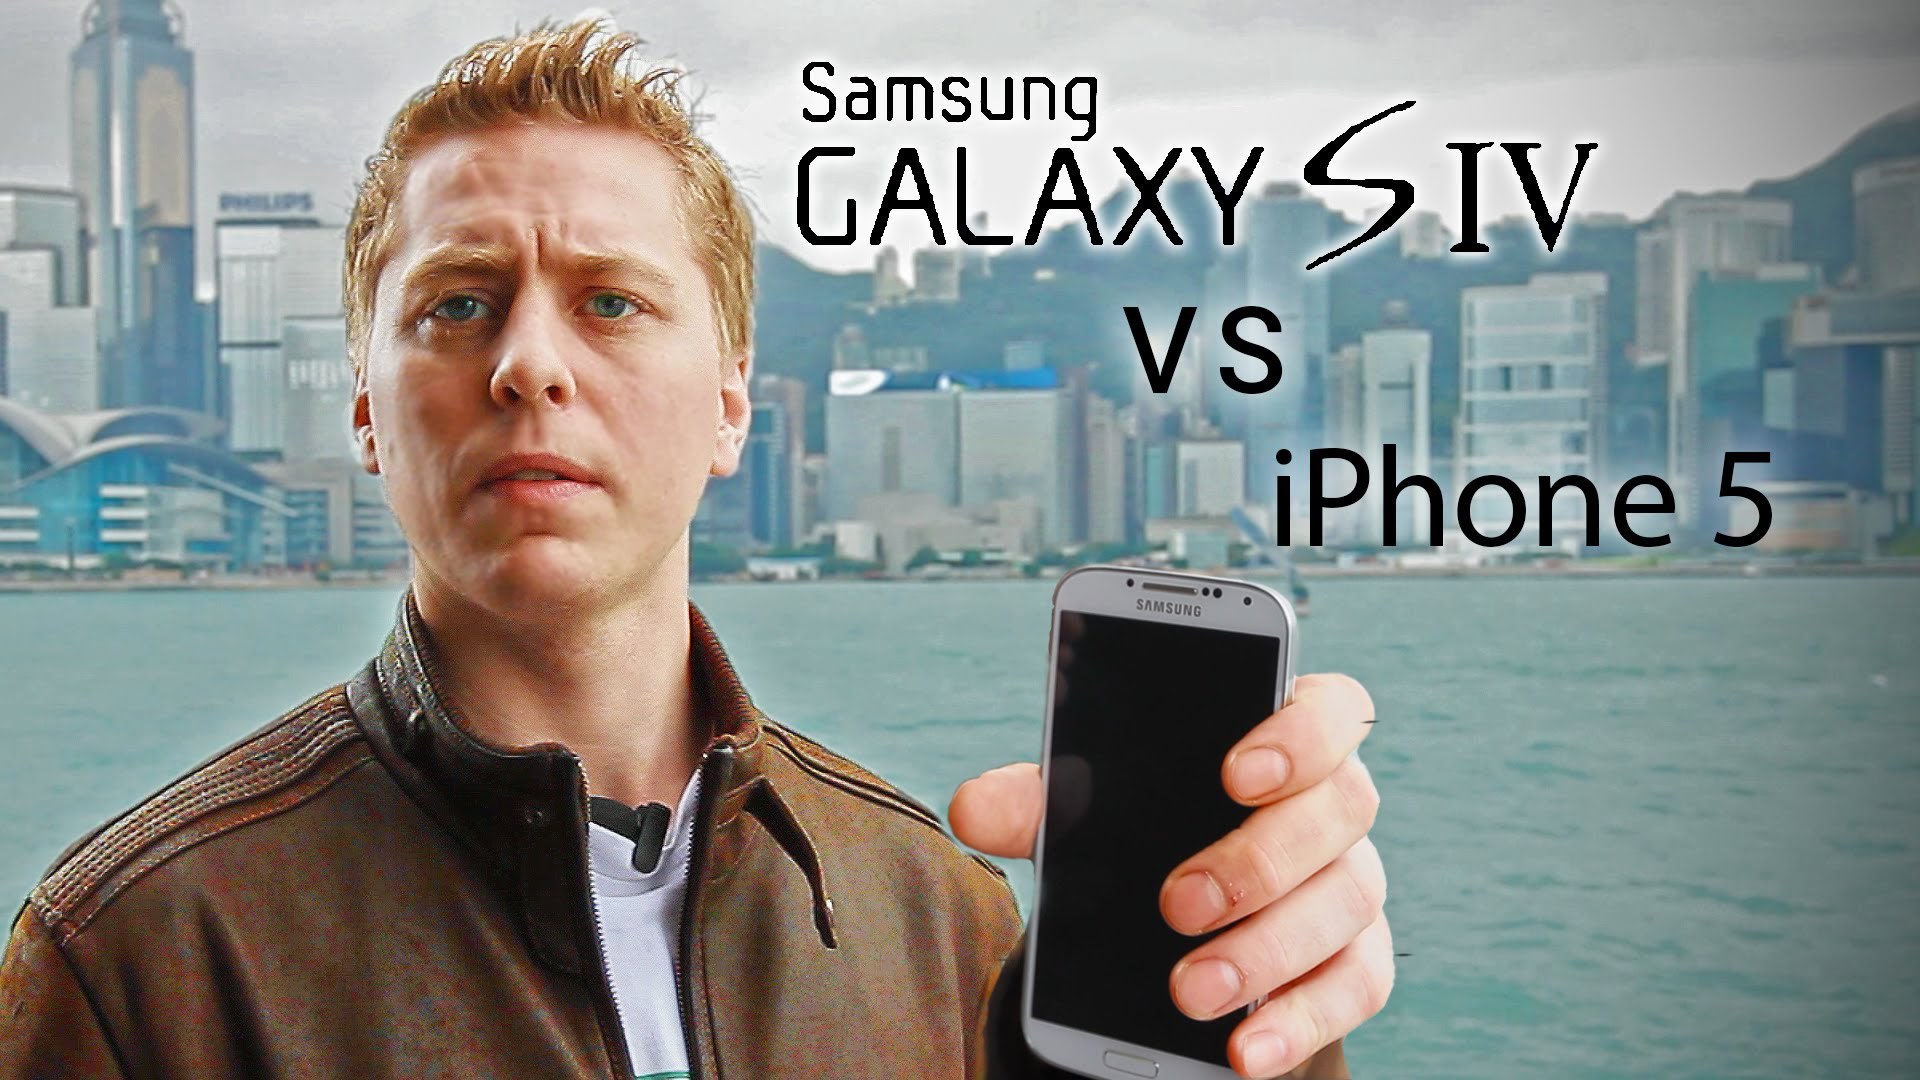 Samsung galaxy S4 drop, drop test galaxy s4, galaxy S4 drop test, iPhone 5 vs galaxy s4 drop test, iphone 5 vs galaxy s3 drop test